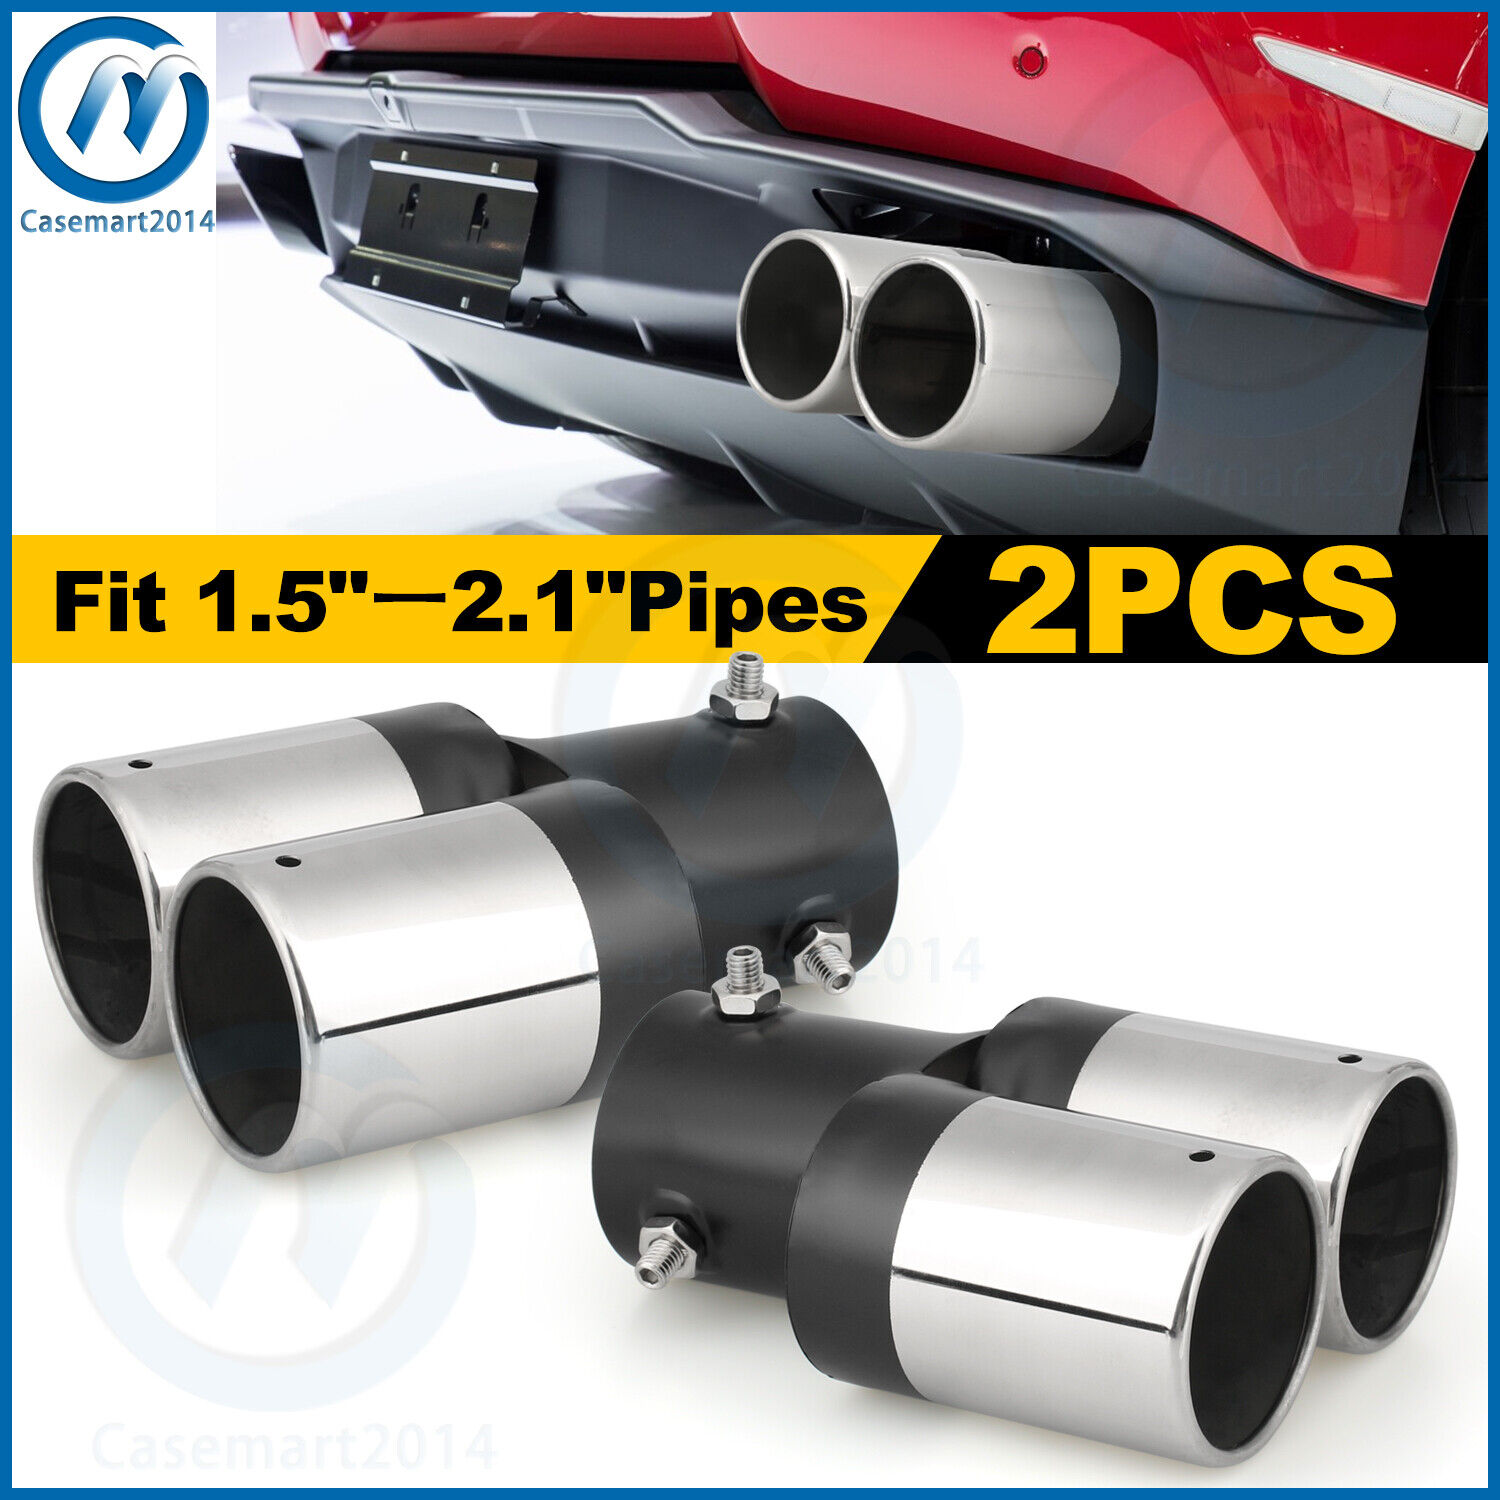 2PCS Double-Barrel Car Rear Exhaust Pipe Tail Muffler Tip Universal Tail Throat